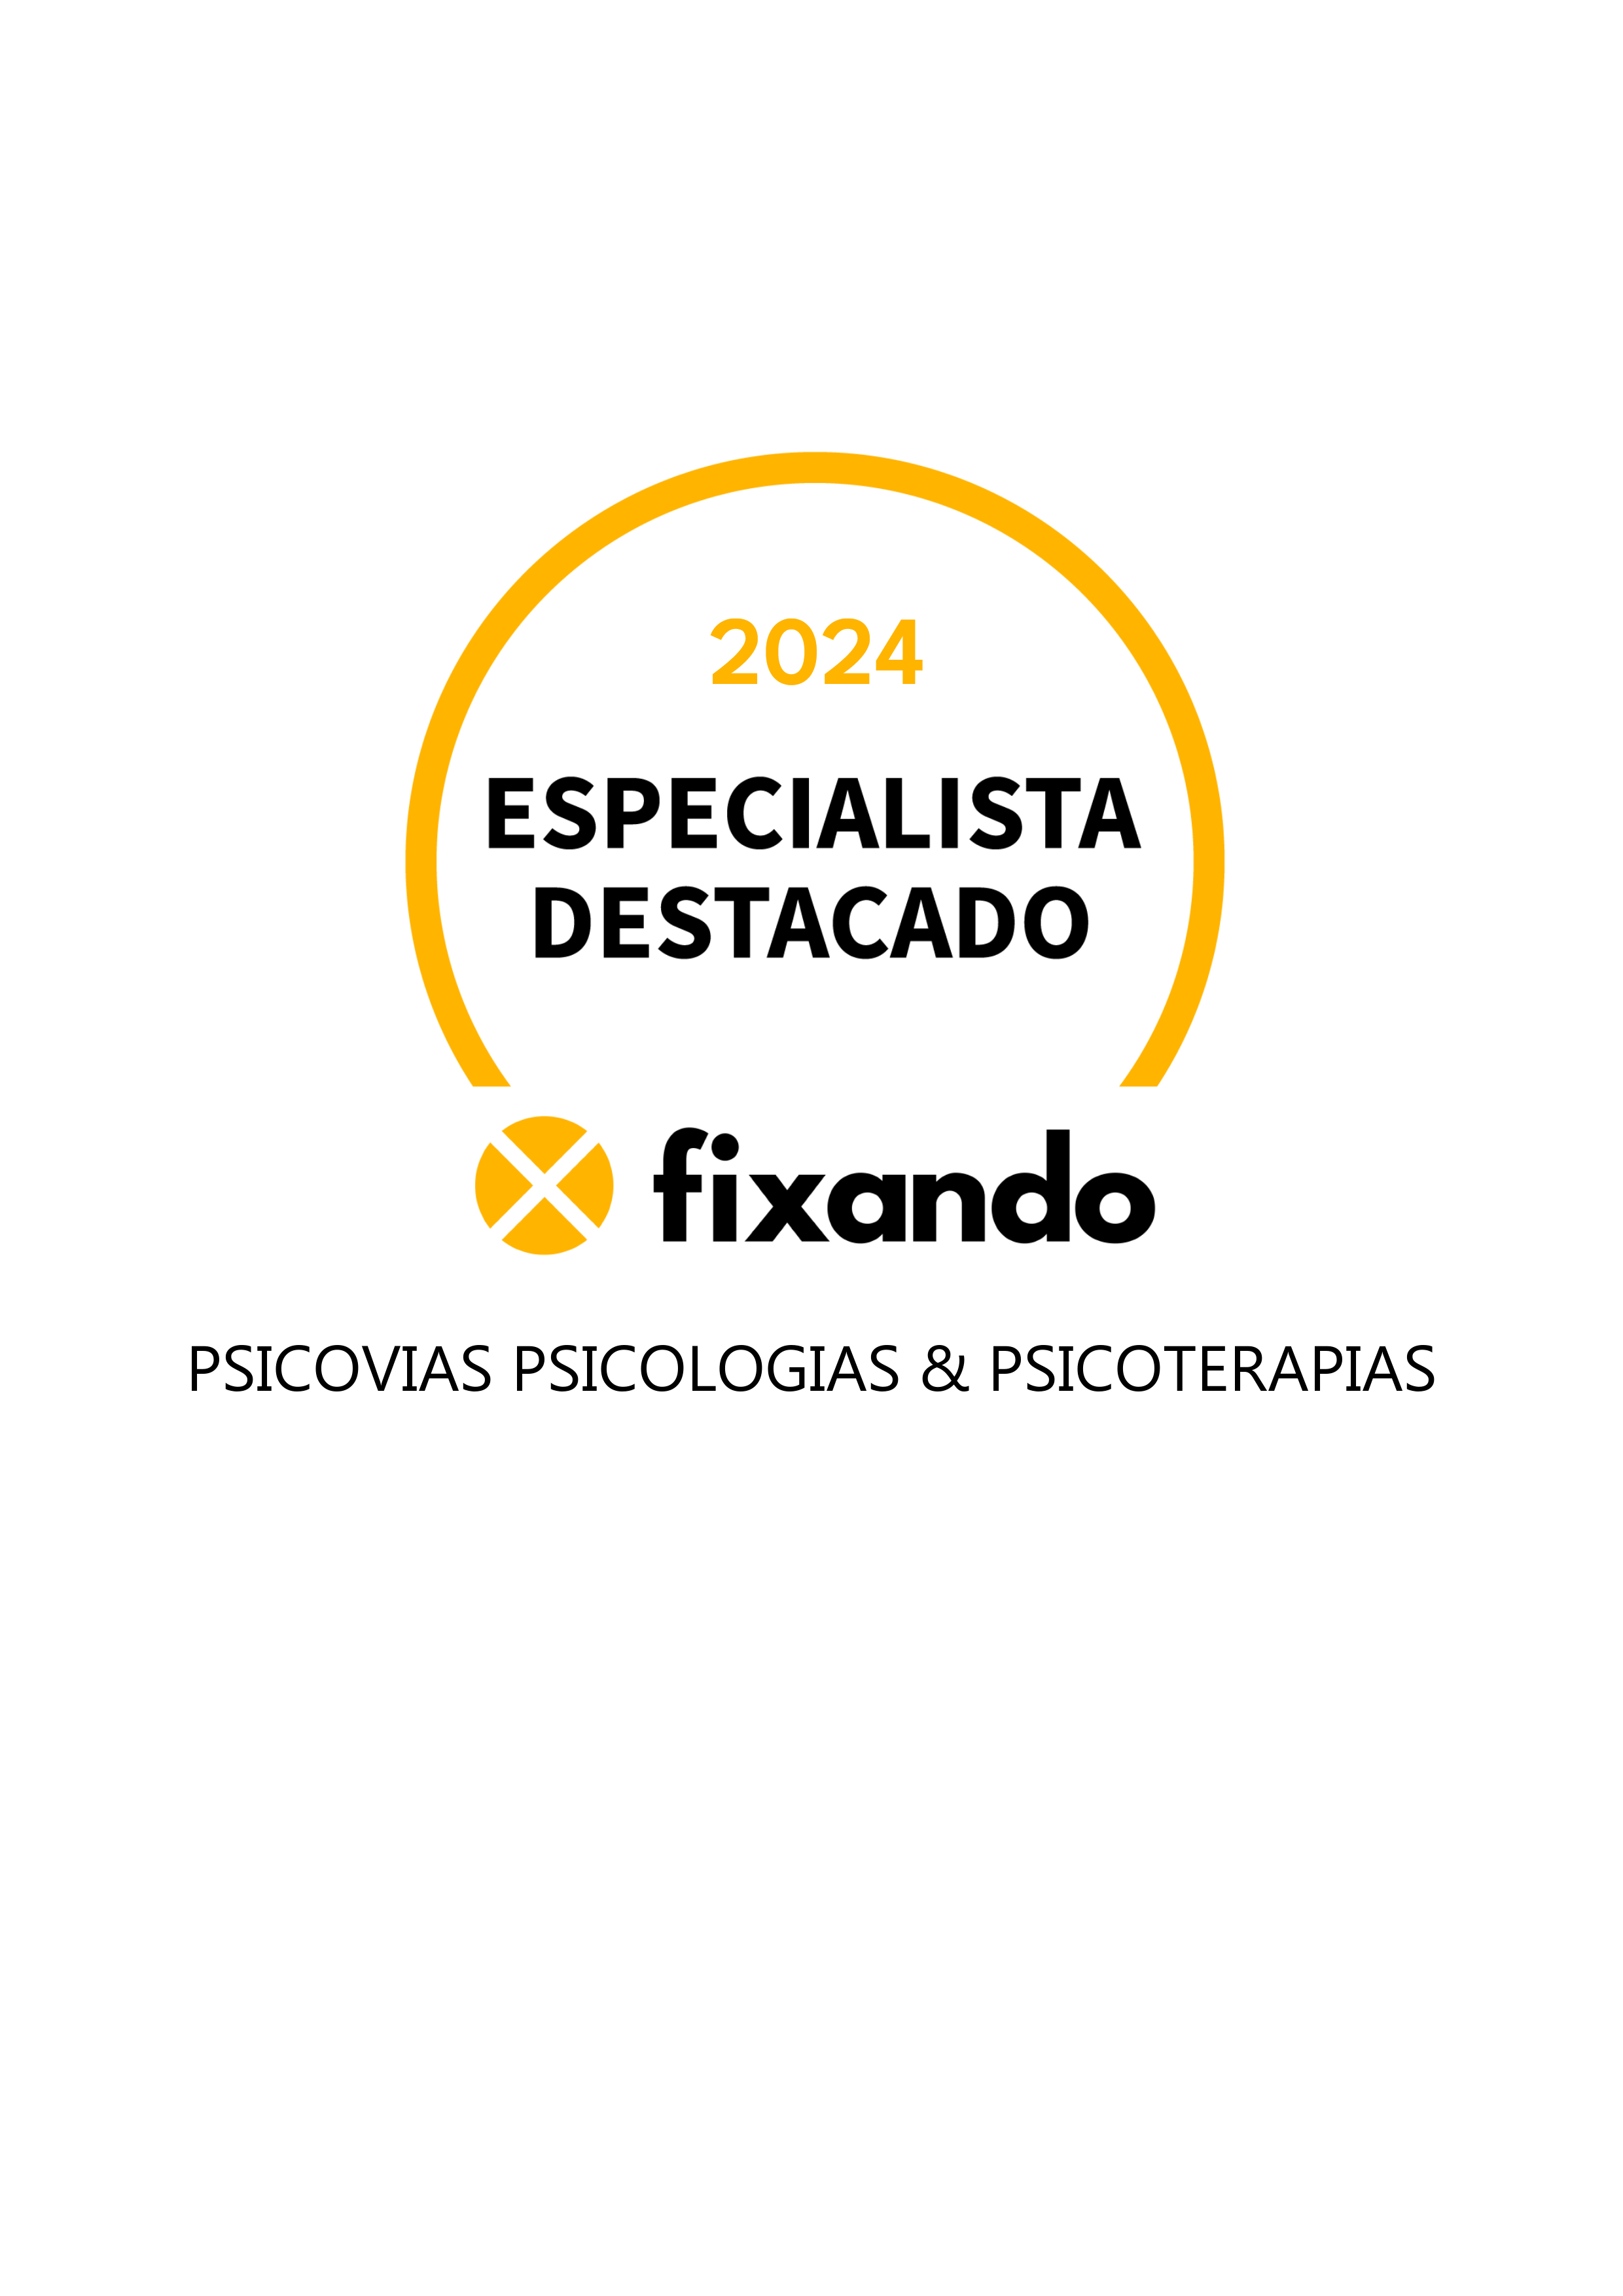 PSICOVIAS Psicologias & Psicoterapias - Lisboa - Hipnoterapia